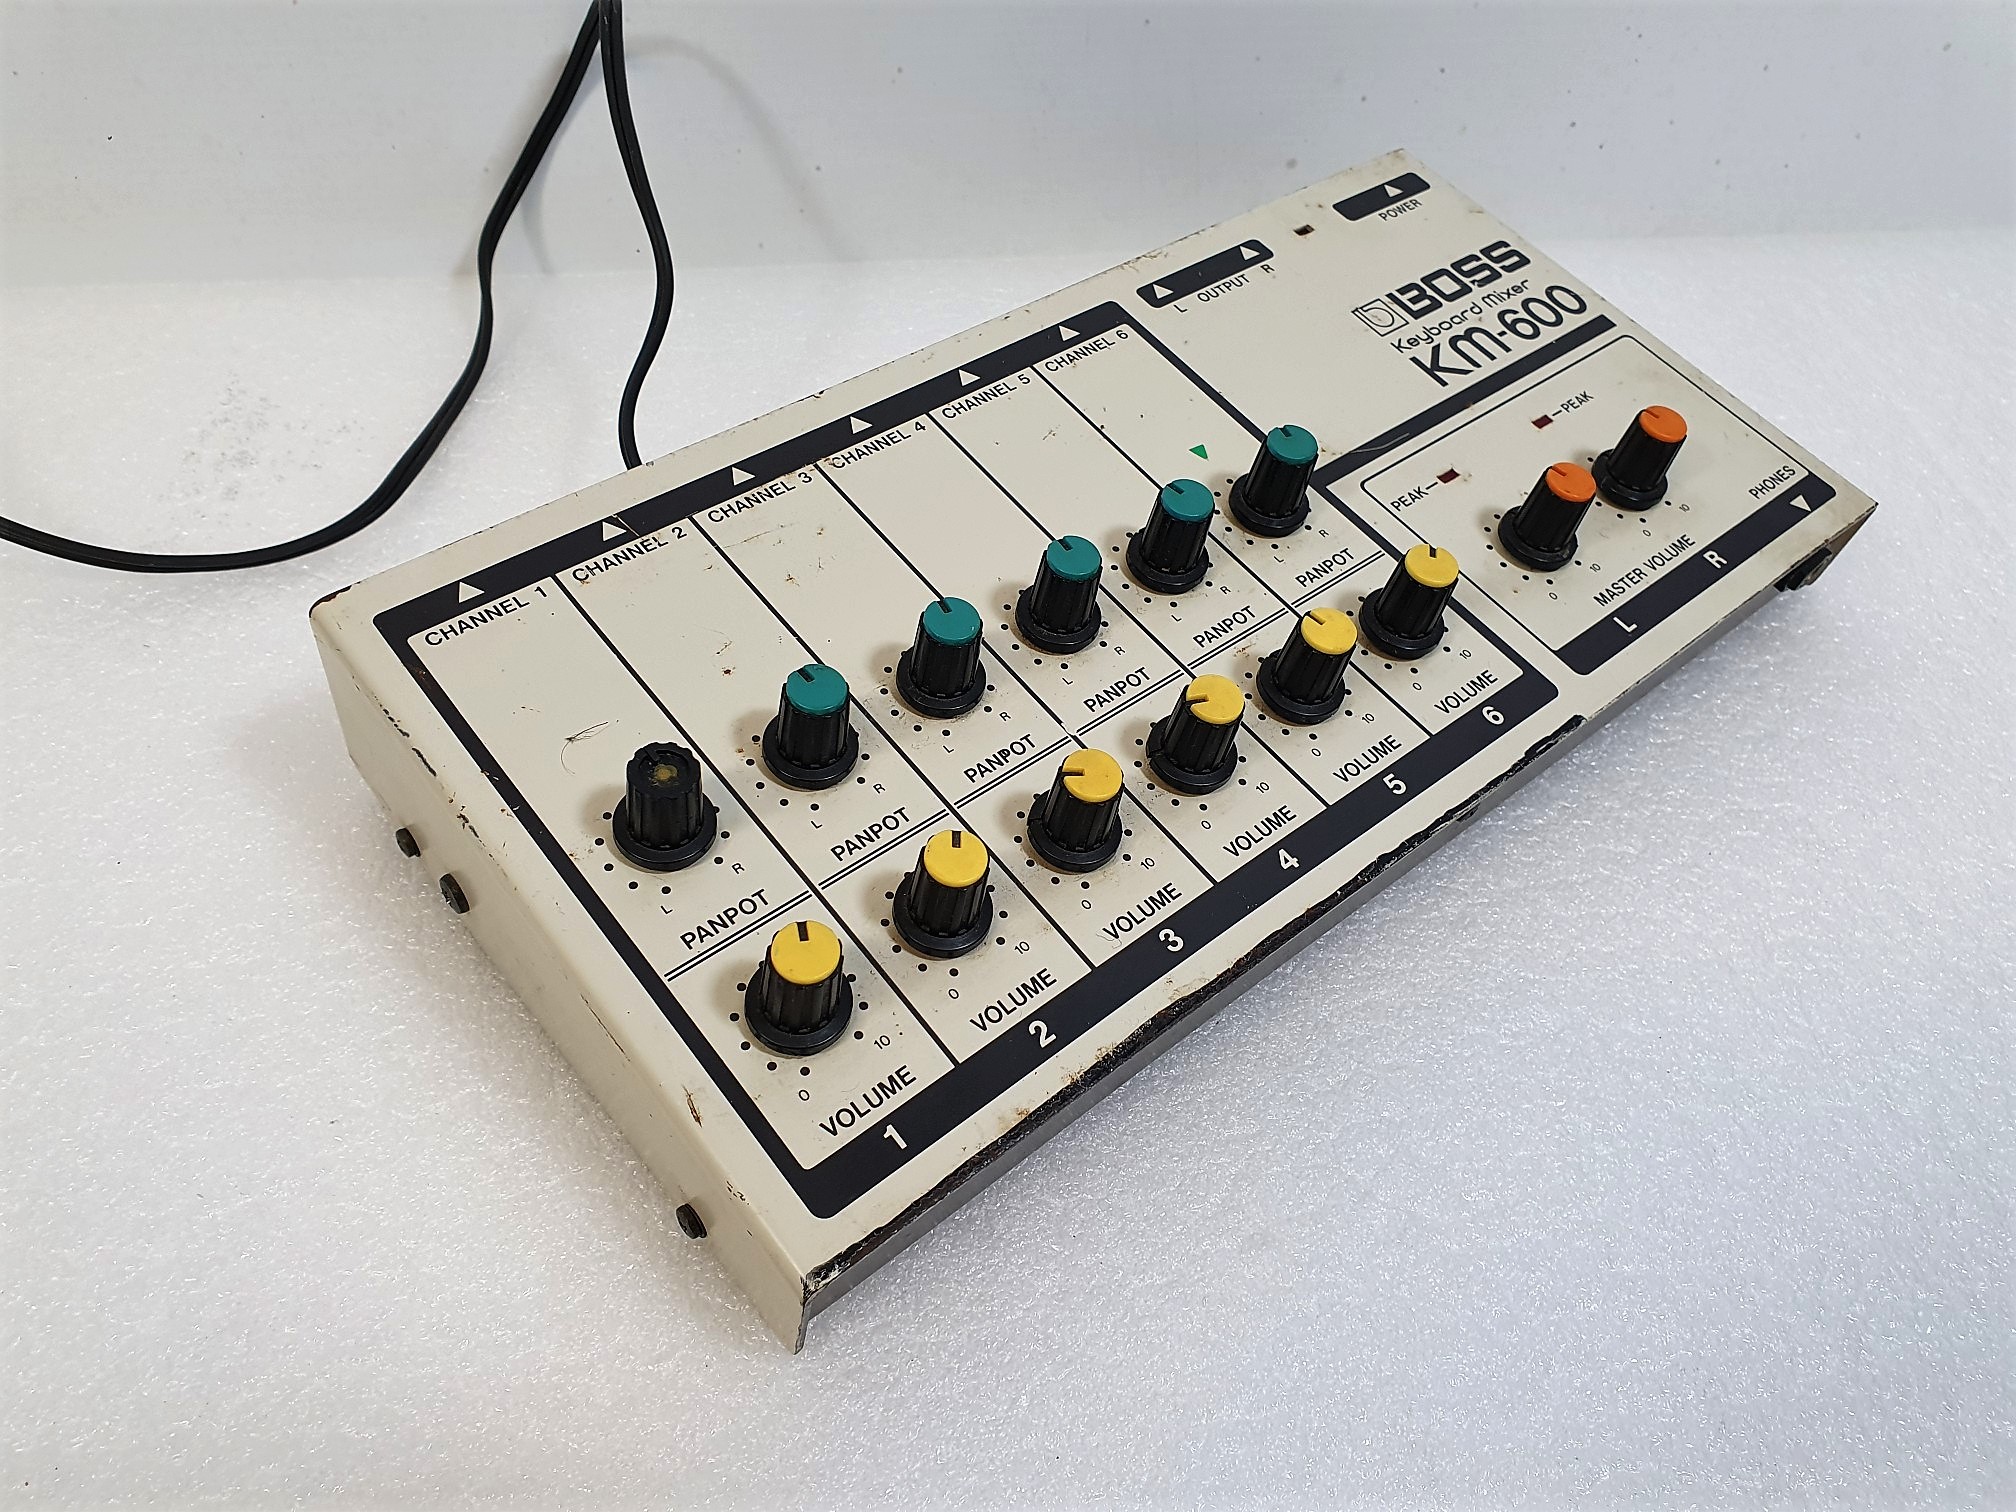 Boss KM-600 Keyboard Mixer FOR SALE - Soundgas